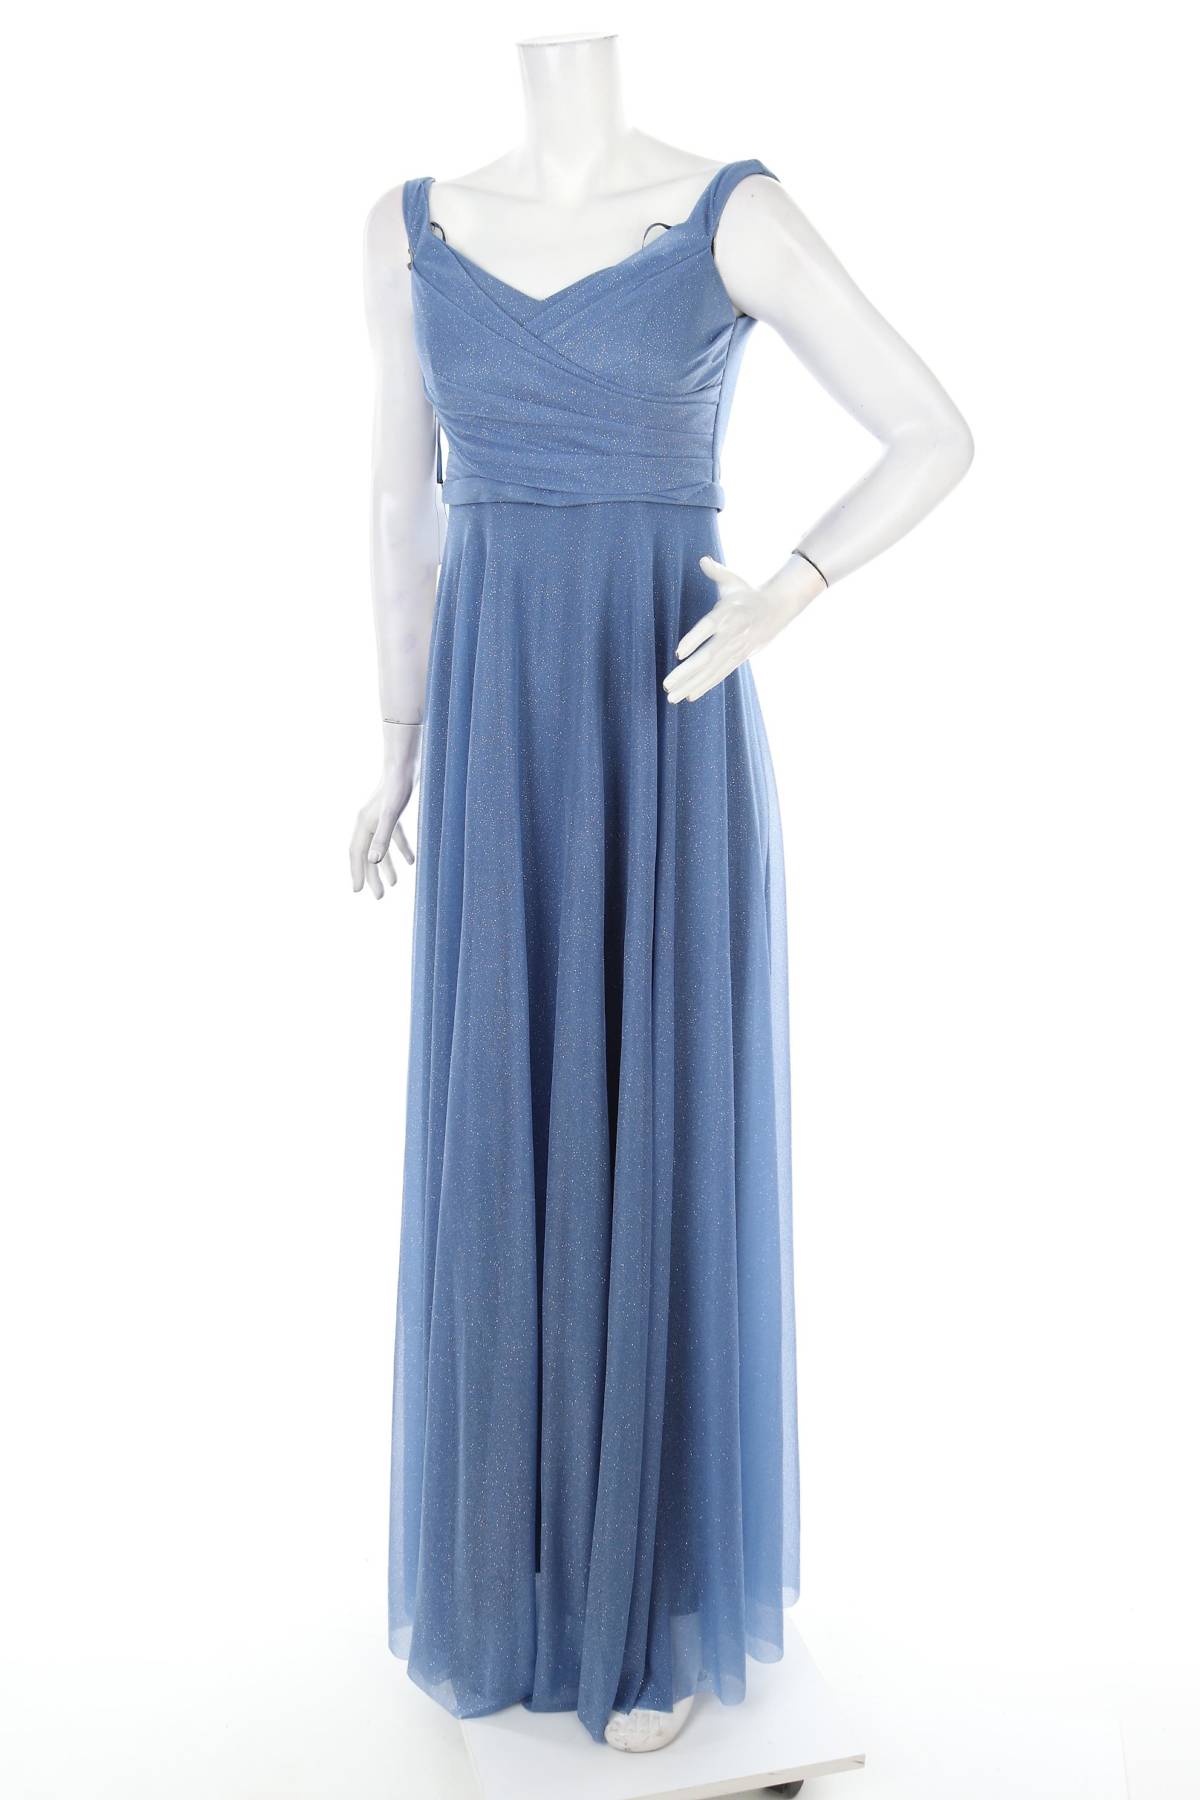 Официална рокля Troyden Collection1